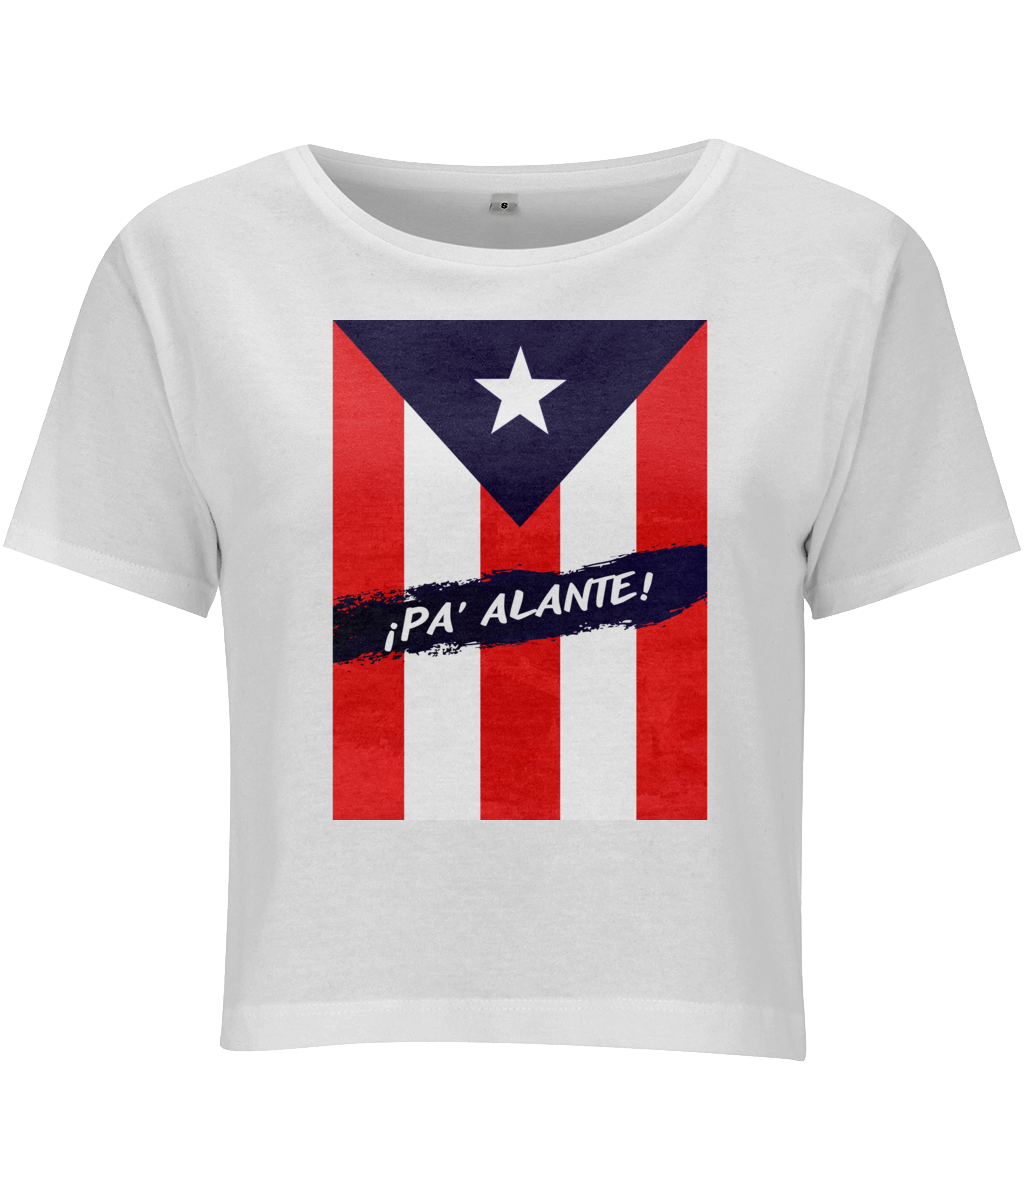 "¡Pa Alante!" Puerto Rico - Cropped Top Tee